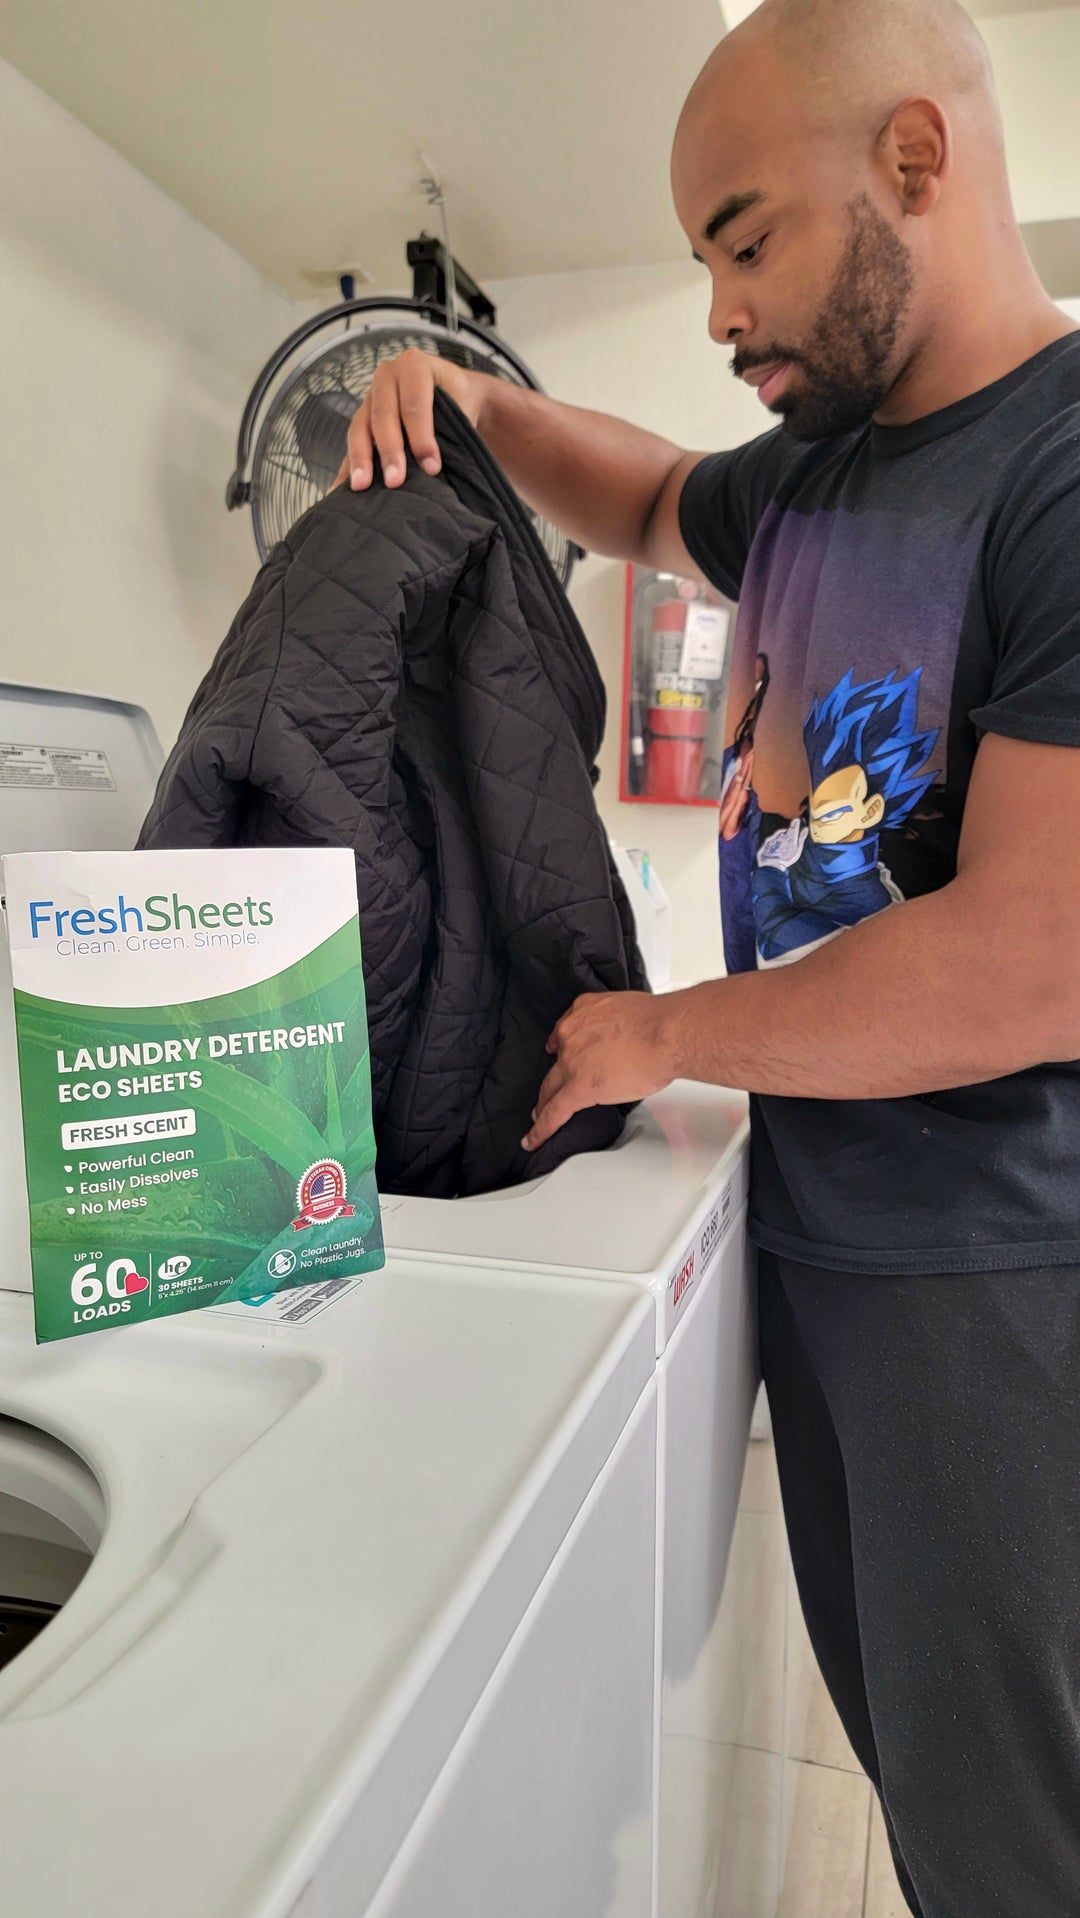 FreshSheets Laundry Detergent